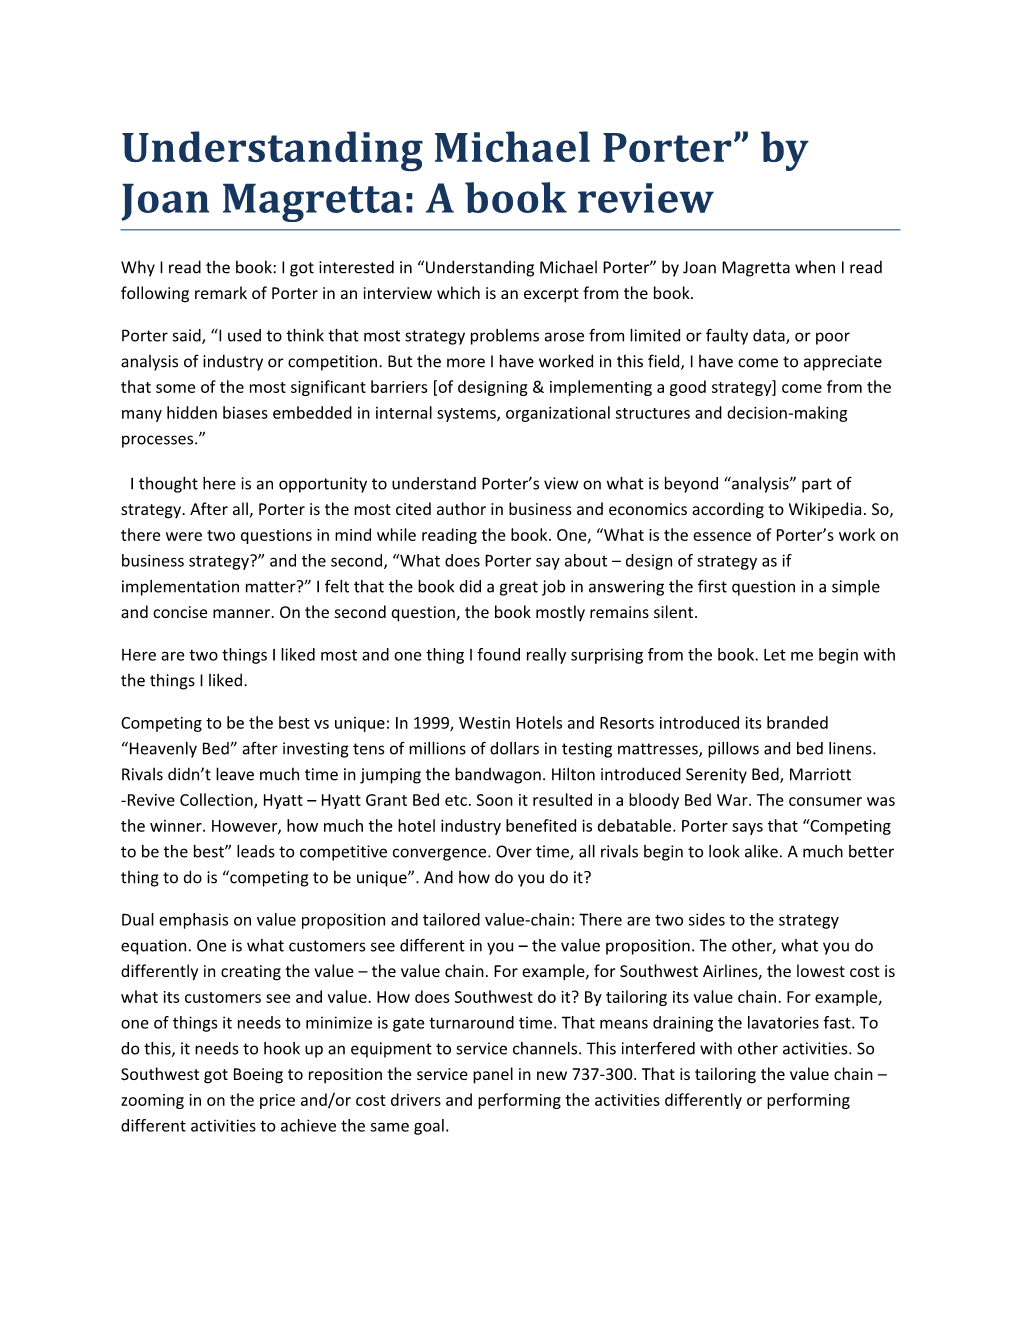 Understanding Michael Porter by Joan Magretta: a Book Review